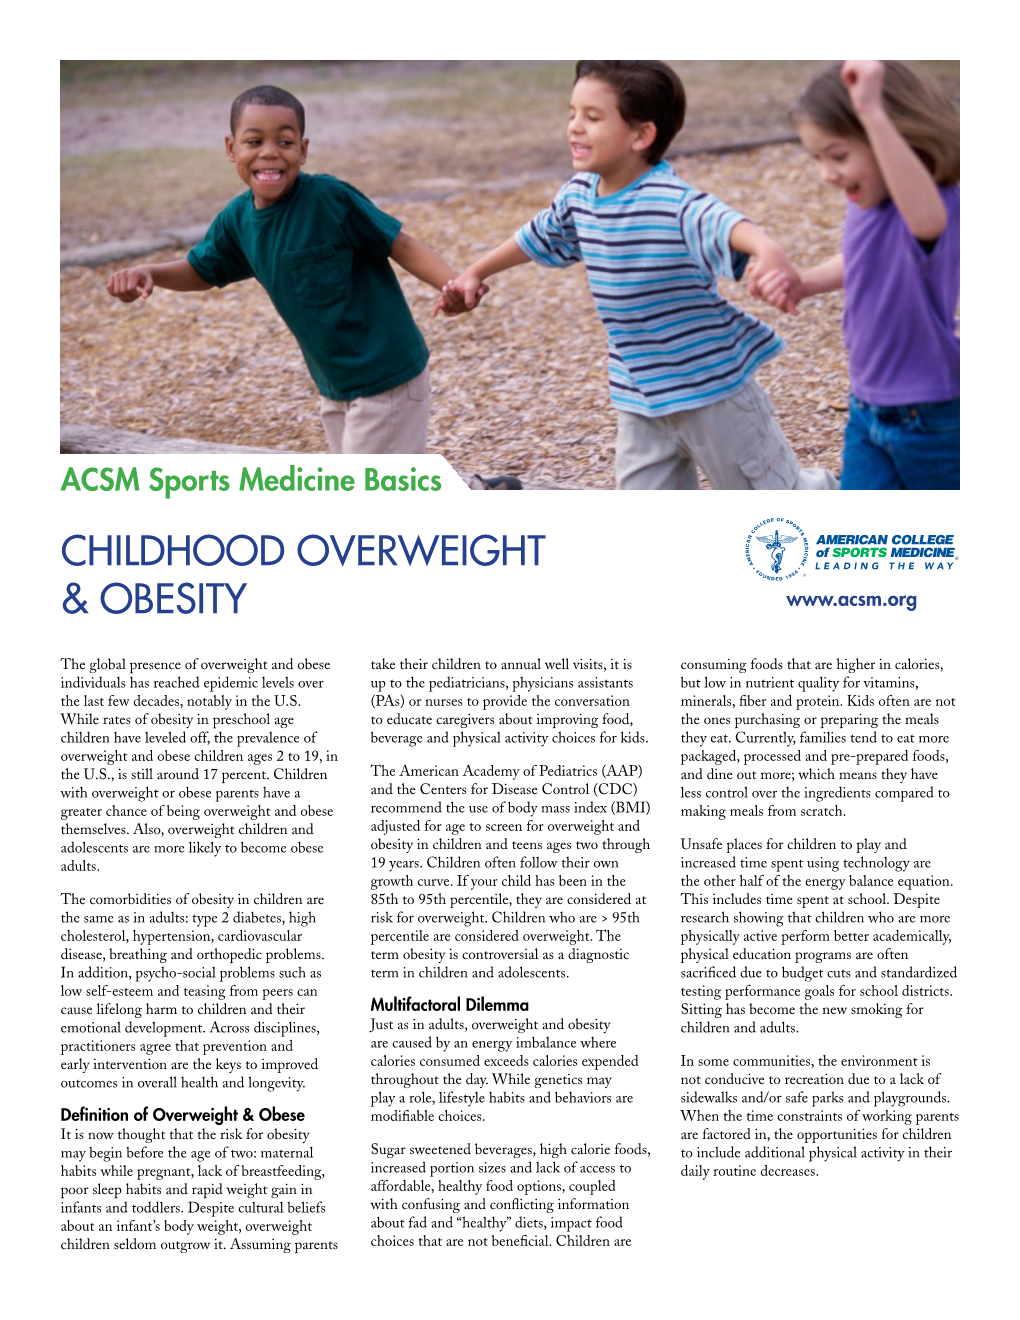 Childhood Overweight & Obesity